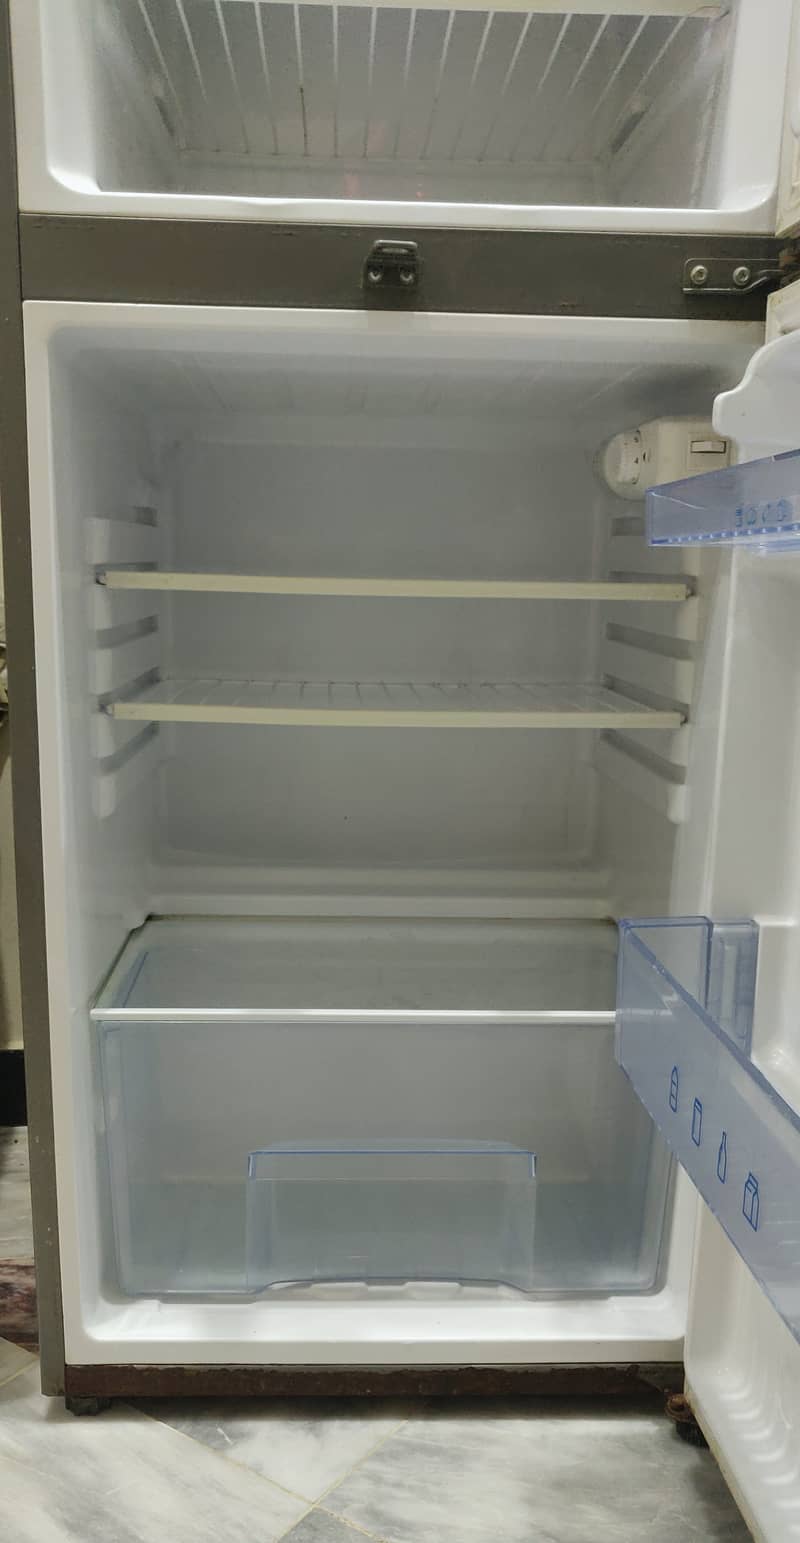 Haier Energy Efficient Refrigerator, 186 L capacity 2